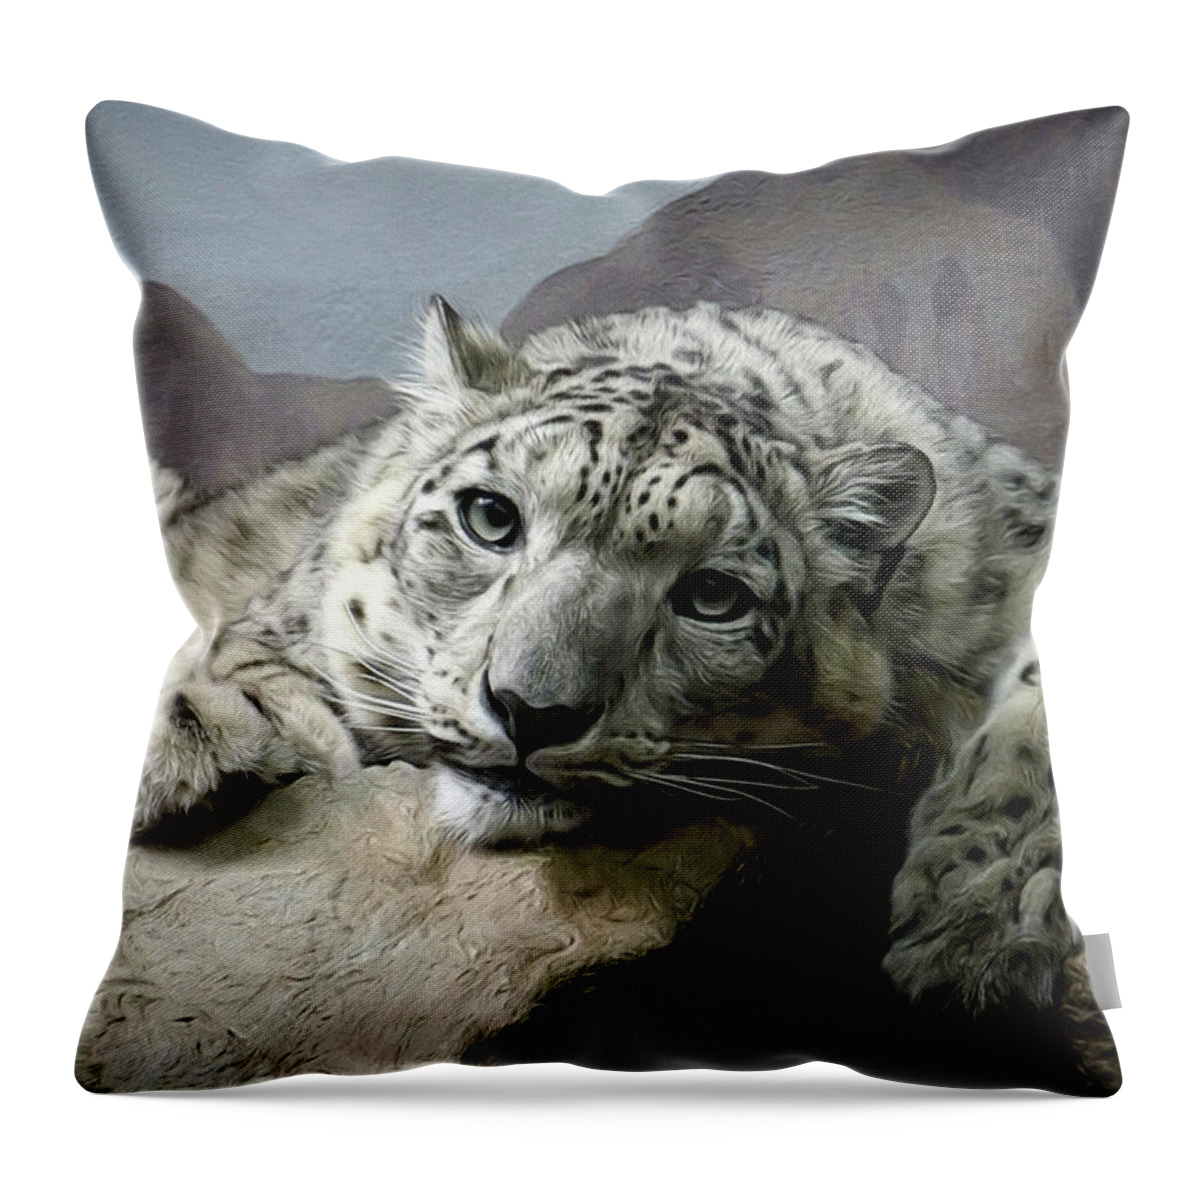 Snow Leopards Throw Pillow featuring the digital art Snow Leopard Relaxing Digital Art by Ernest Echols